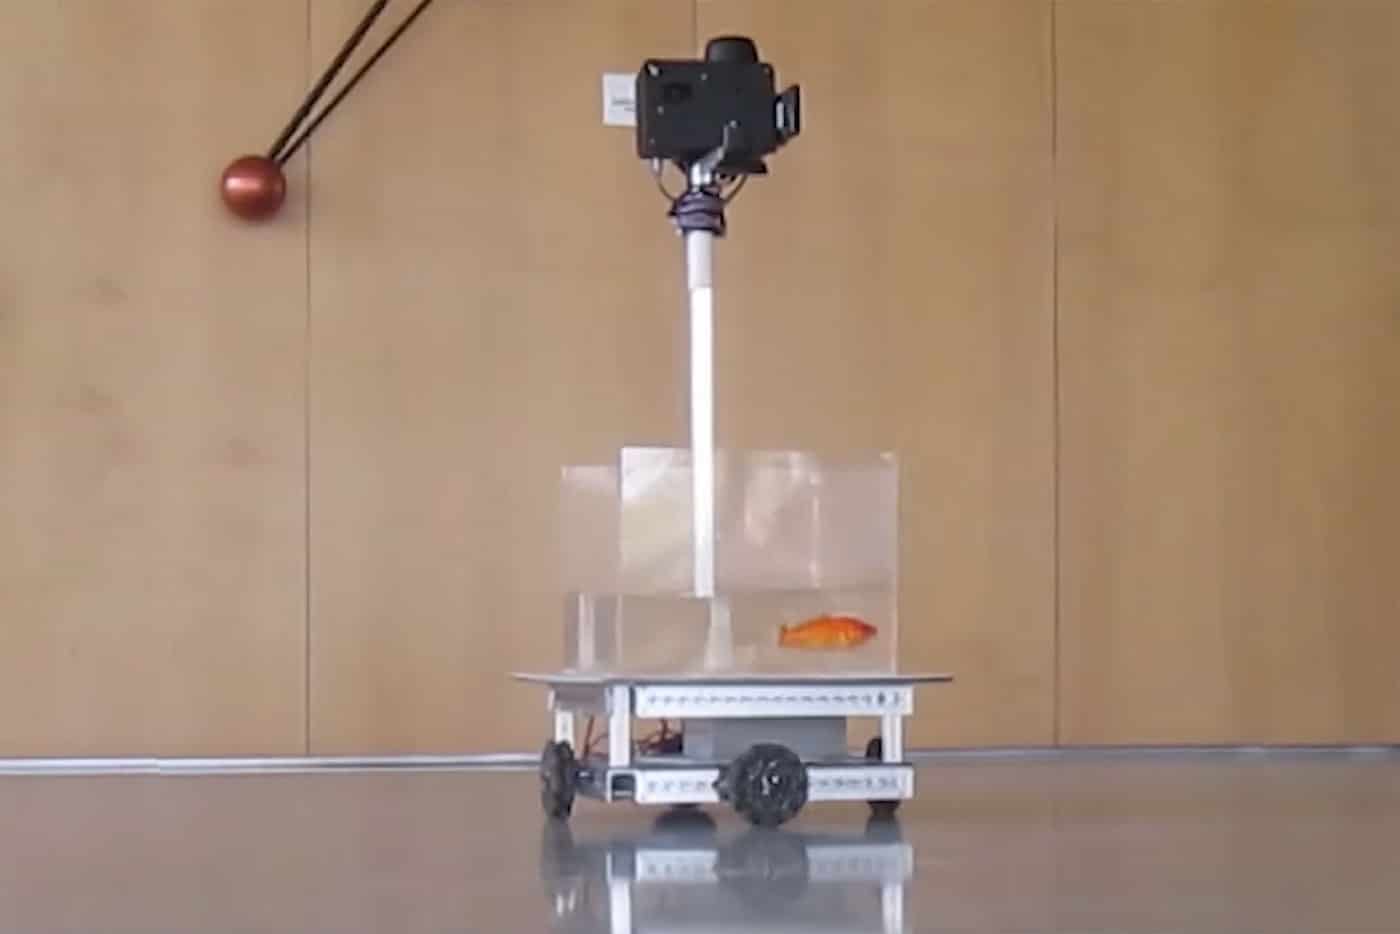 Scientists train goldfish to drive a robotic car